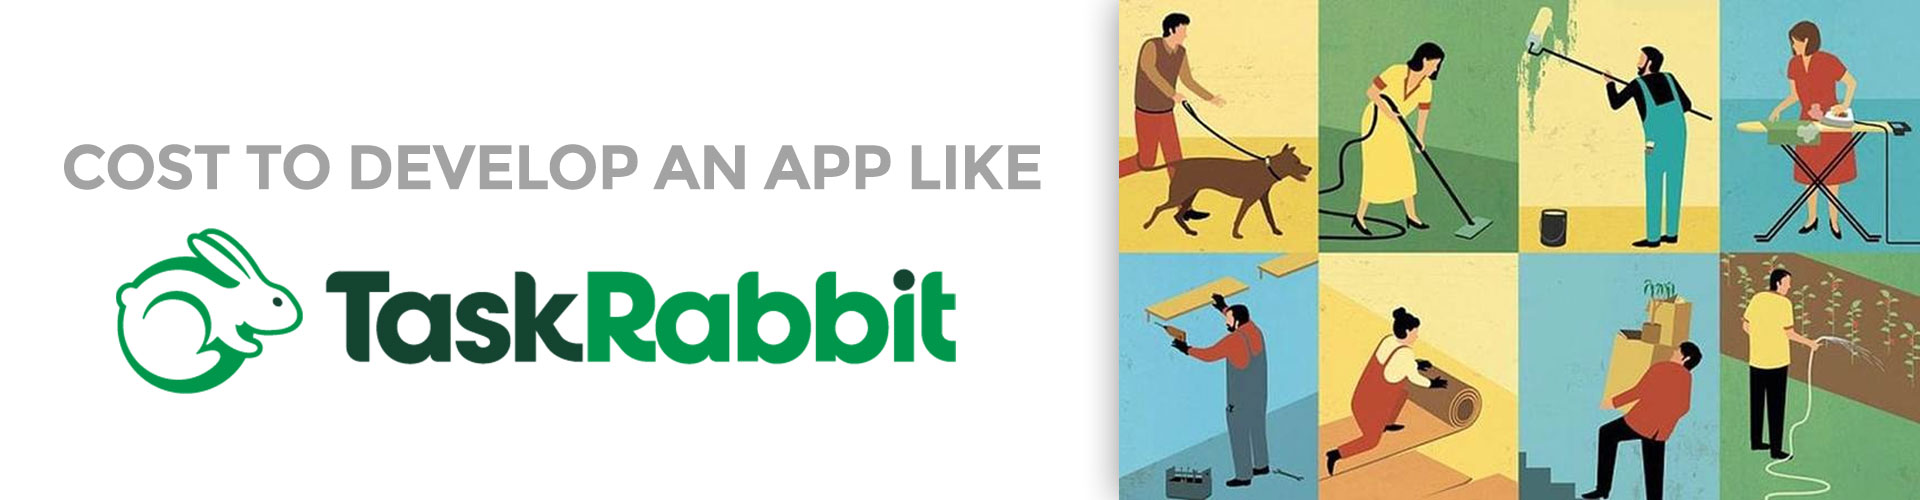 taskrabbit app development cost